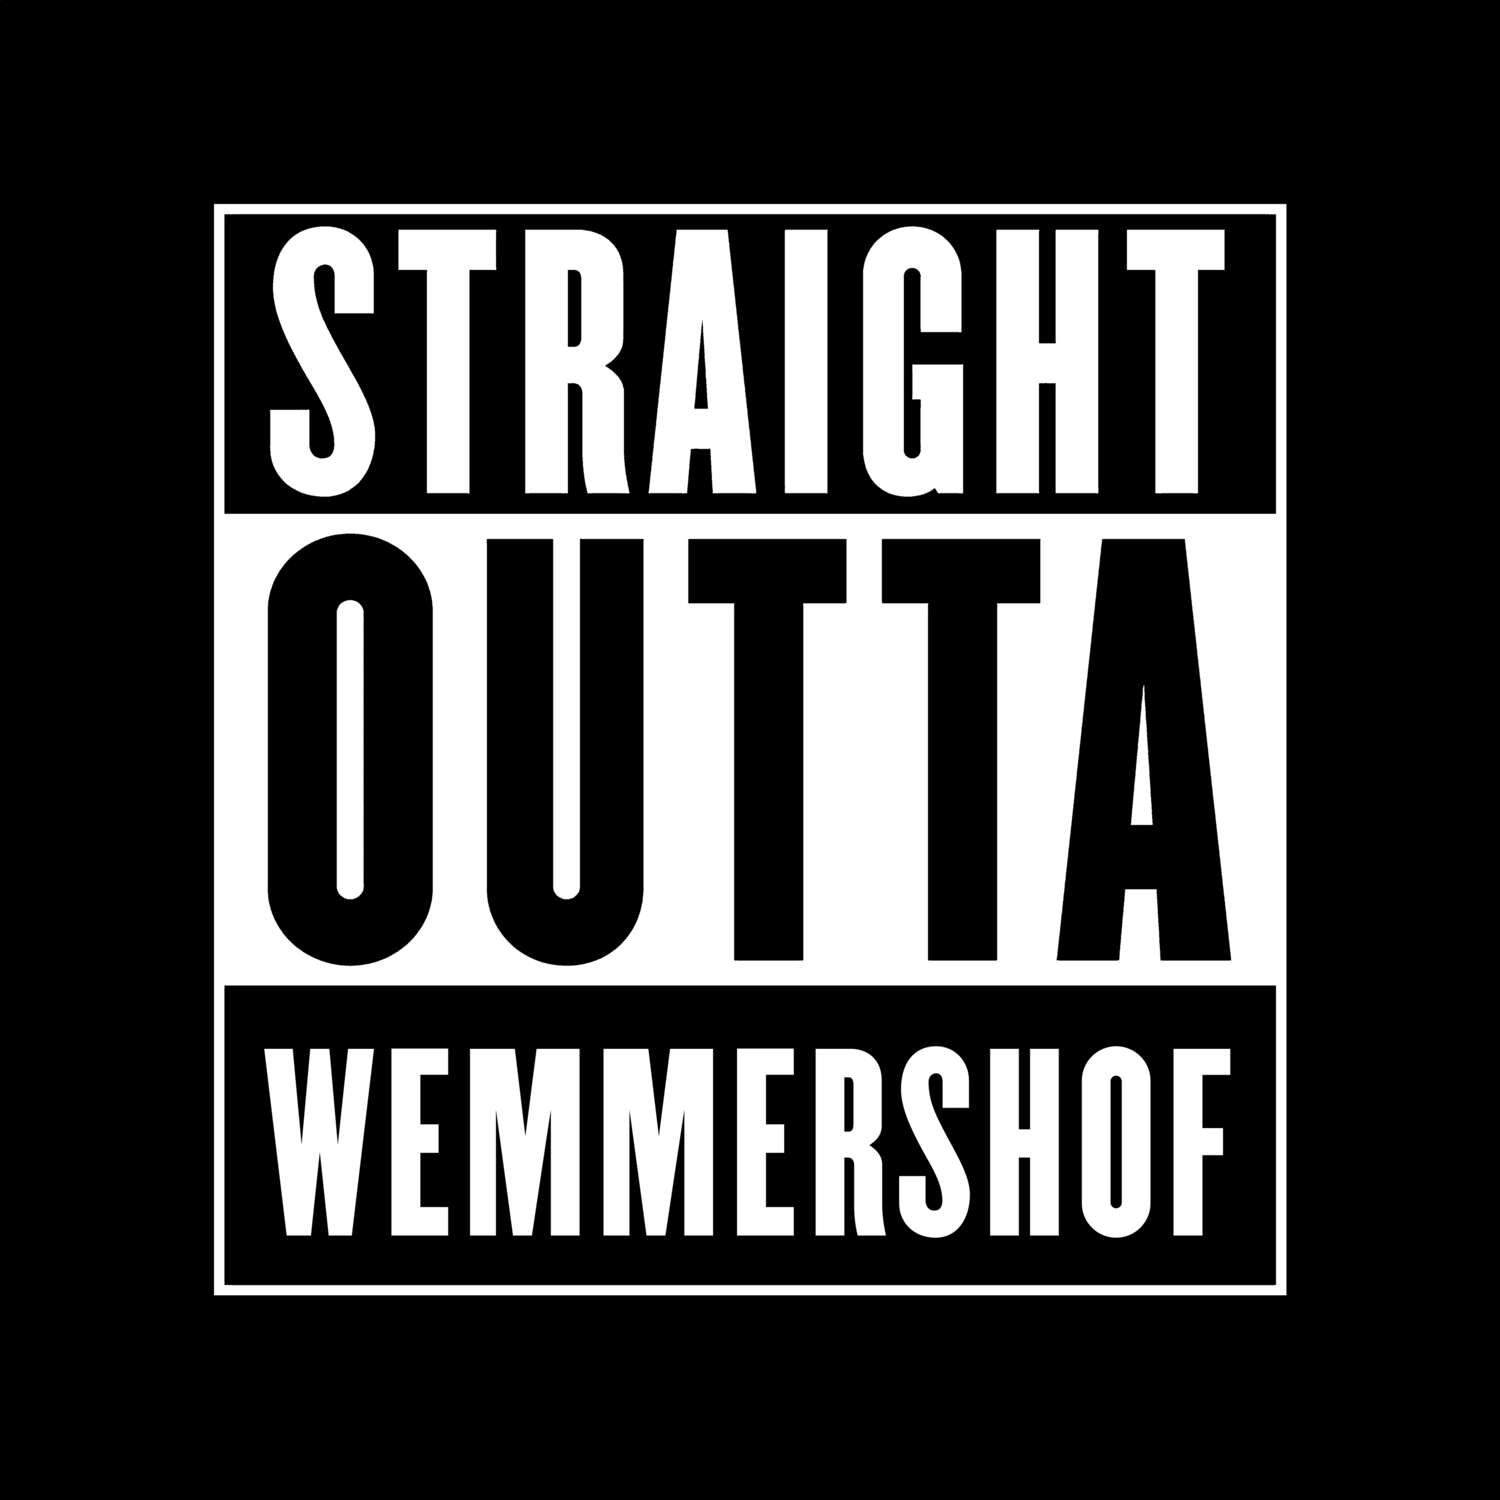 Wemmershof T-Shirt »Straight Outta«